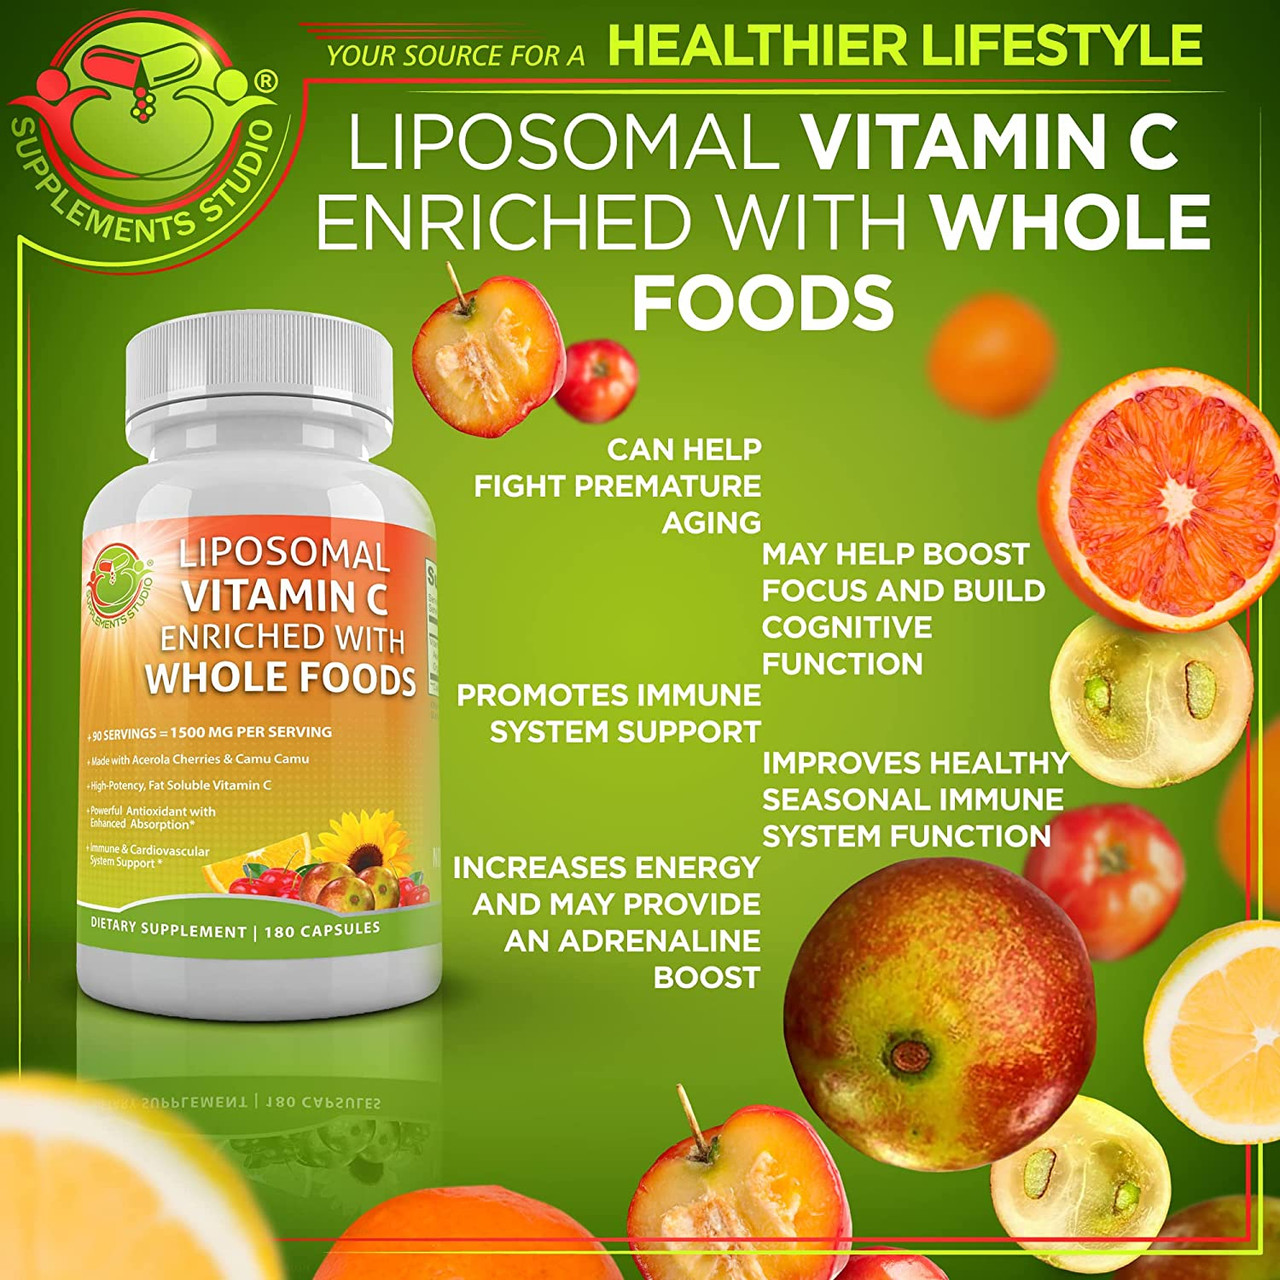 benefit of liposomal vitamin c